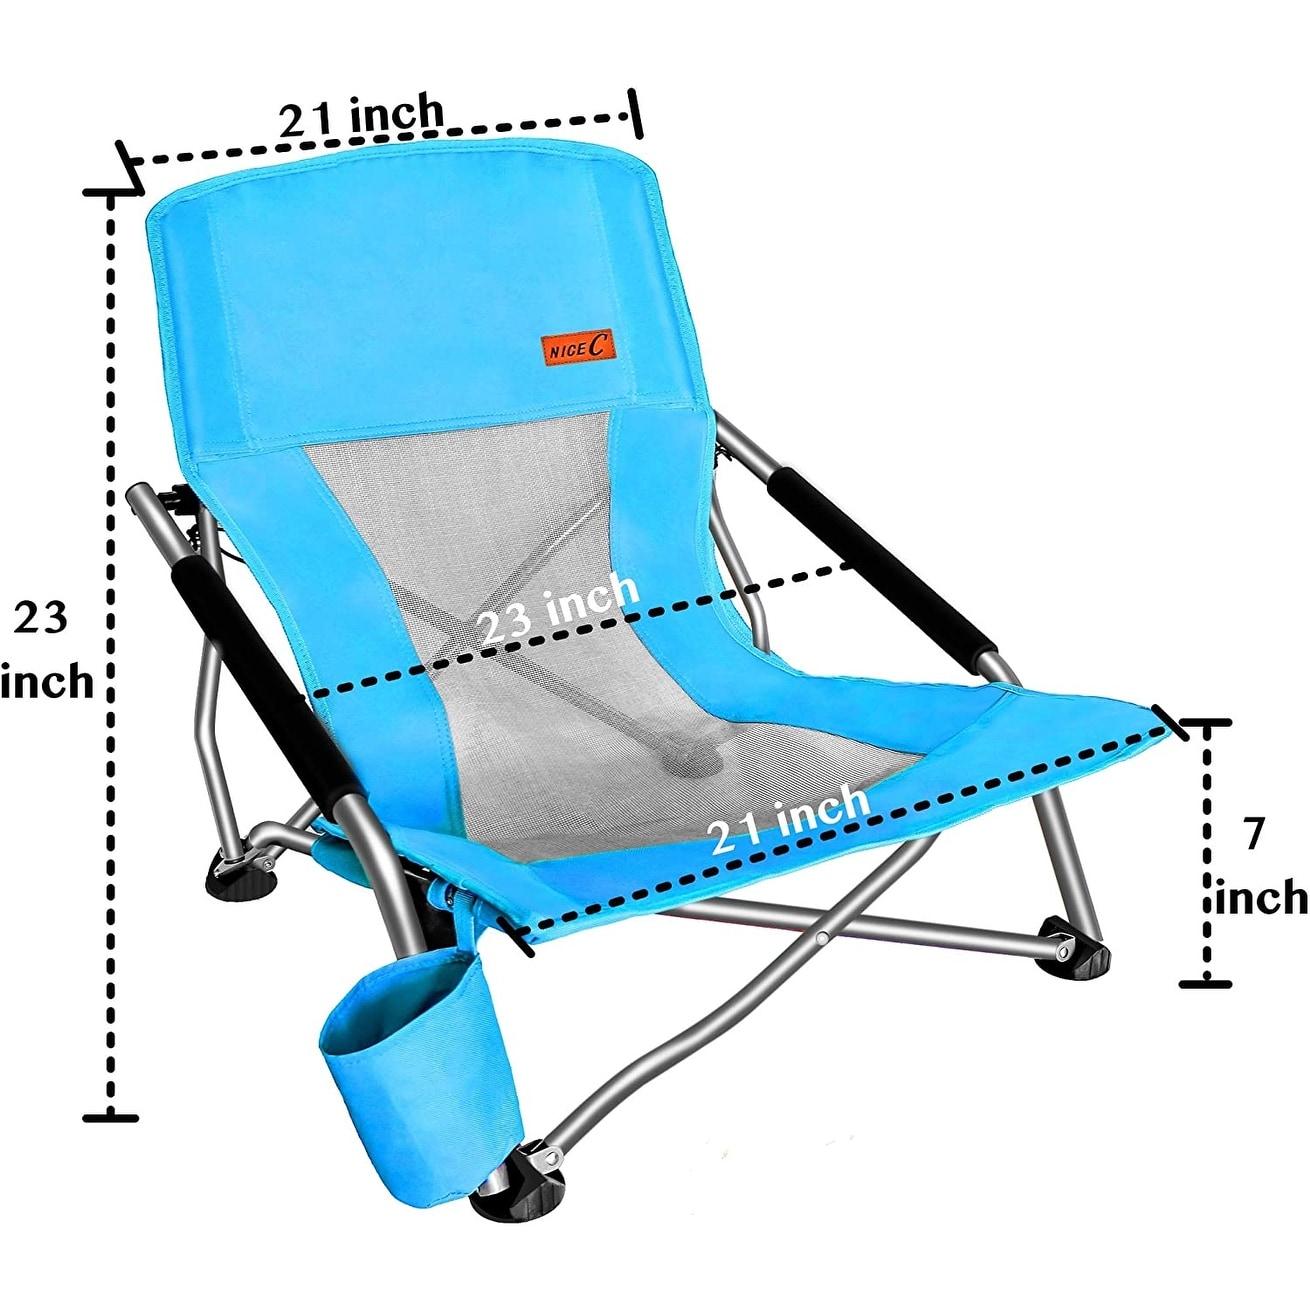 4 Nalu Folding Low Seat Beach Chair Camping Chairs 2 Green & 2 Blue 